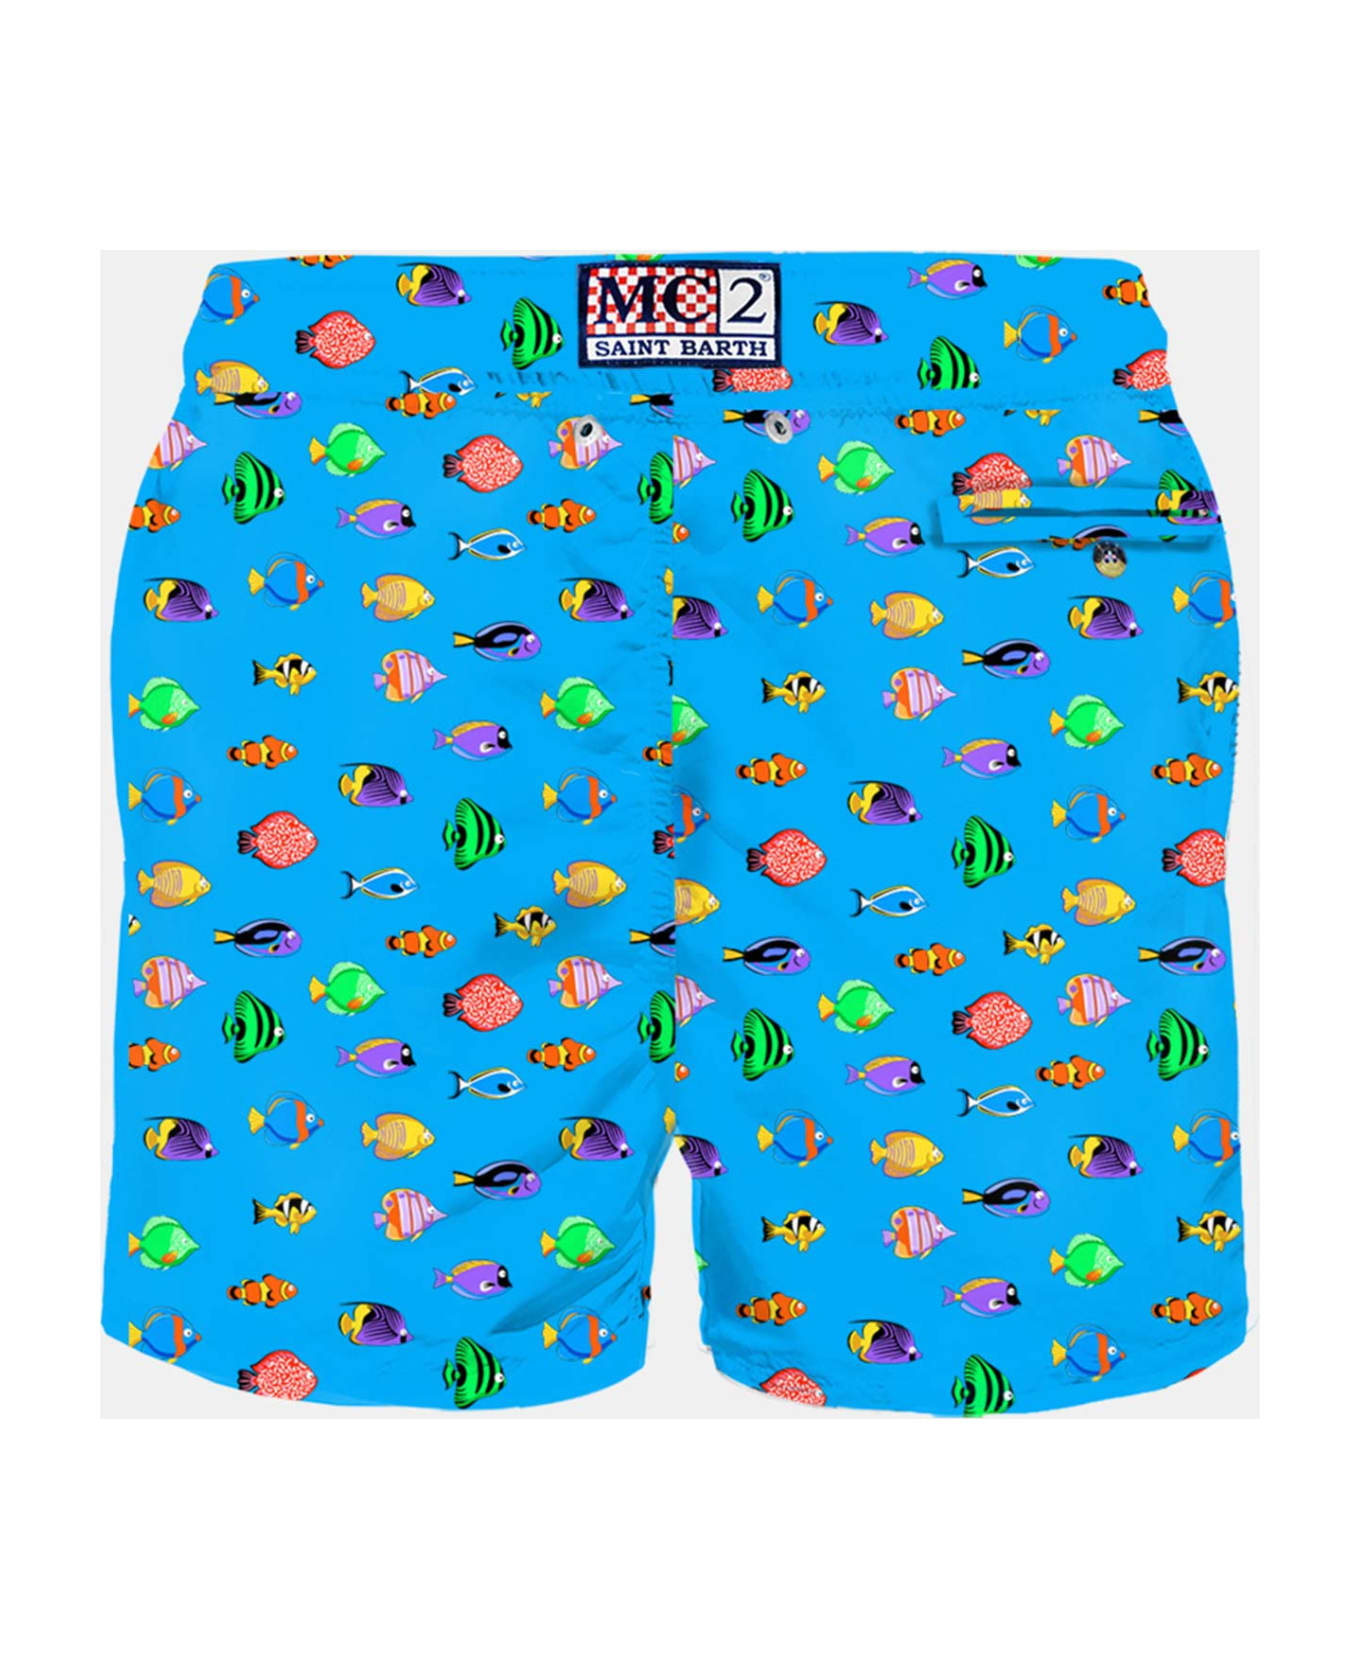 MC2 Saint Barth Man Light Fabric Swim Shorts With Fish Print - SKY スイムトランクス